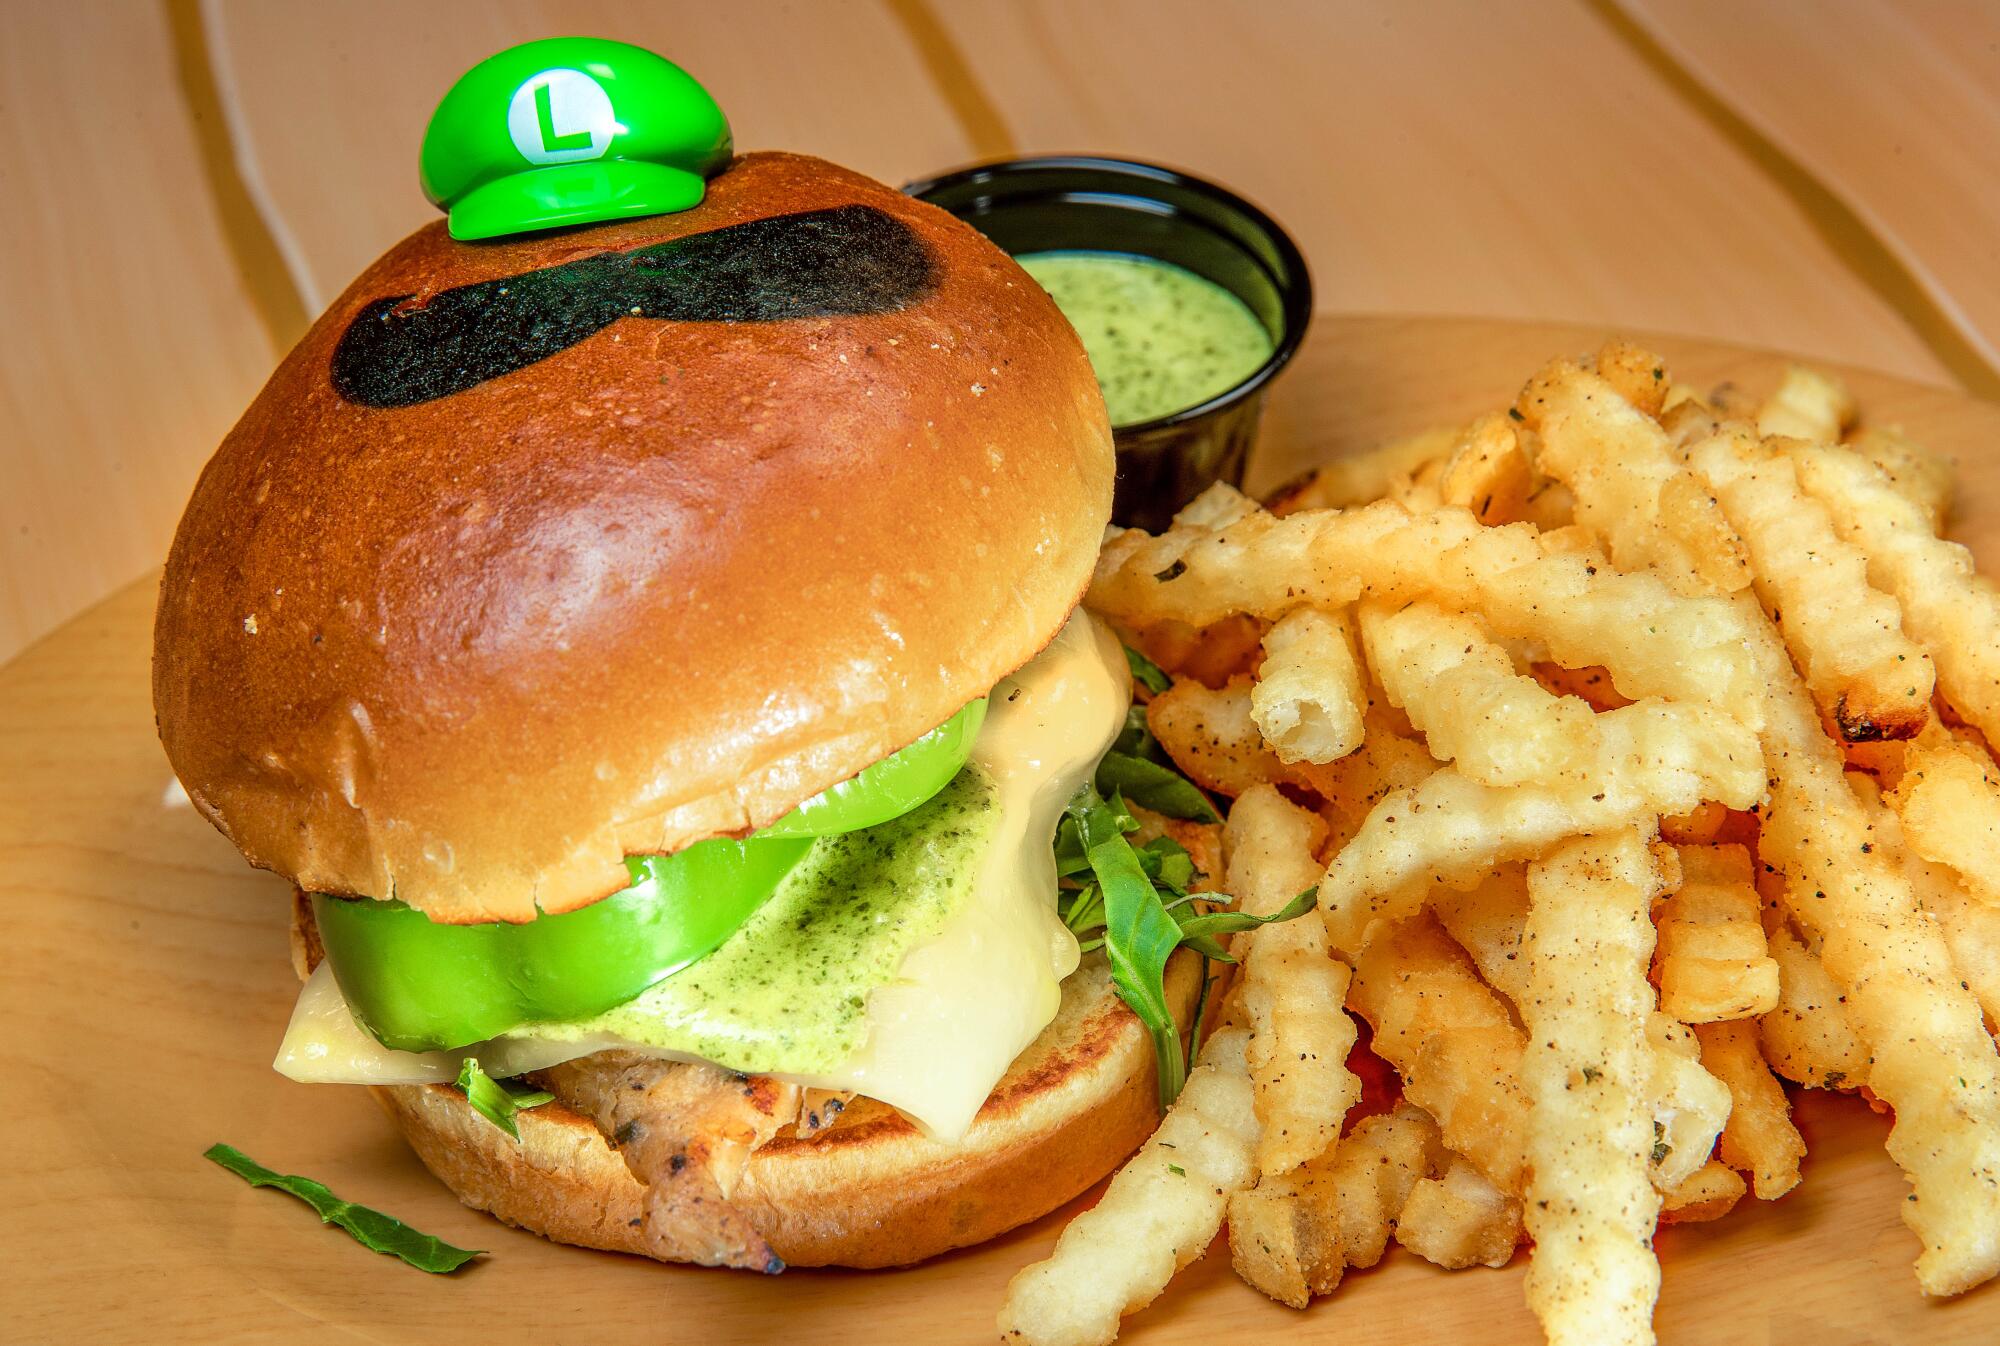 Luigi Burger with fries.